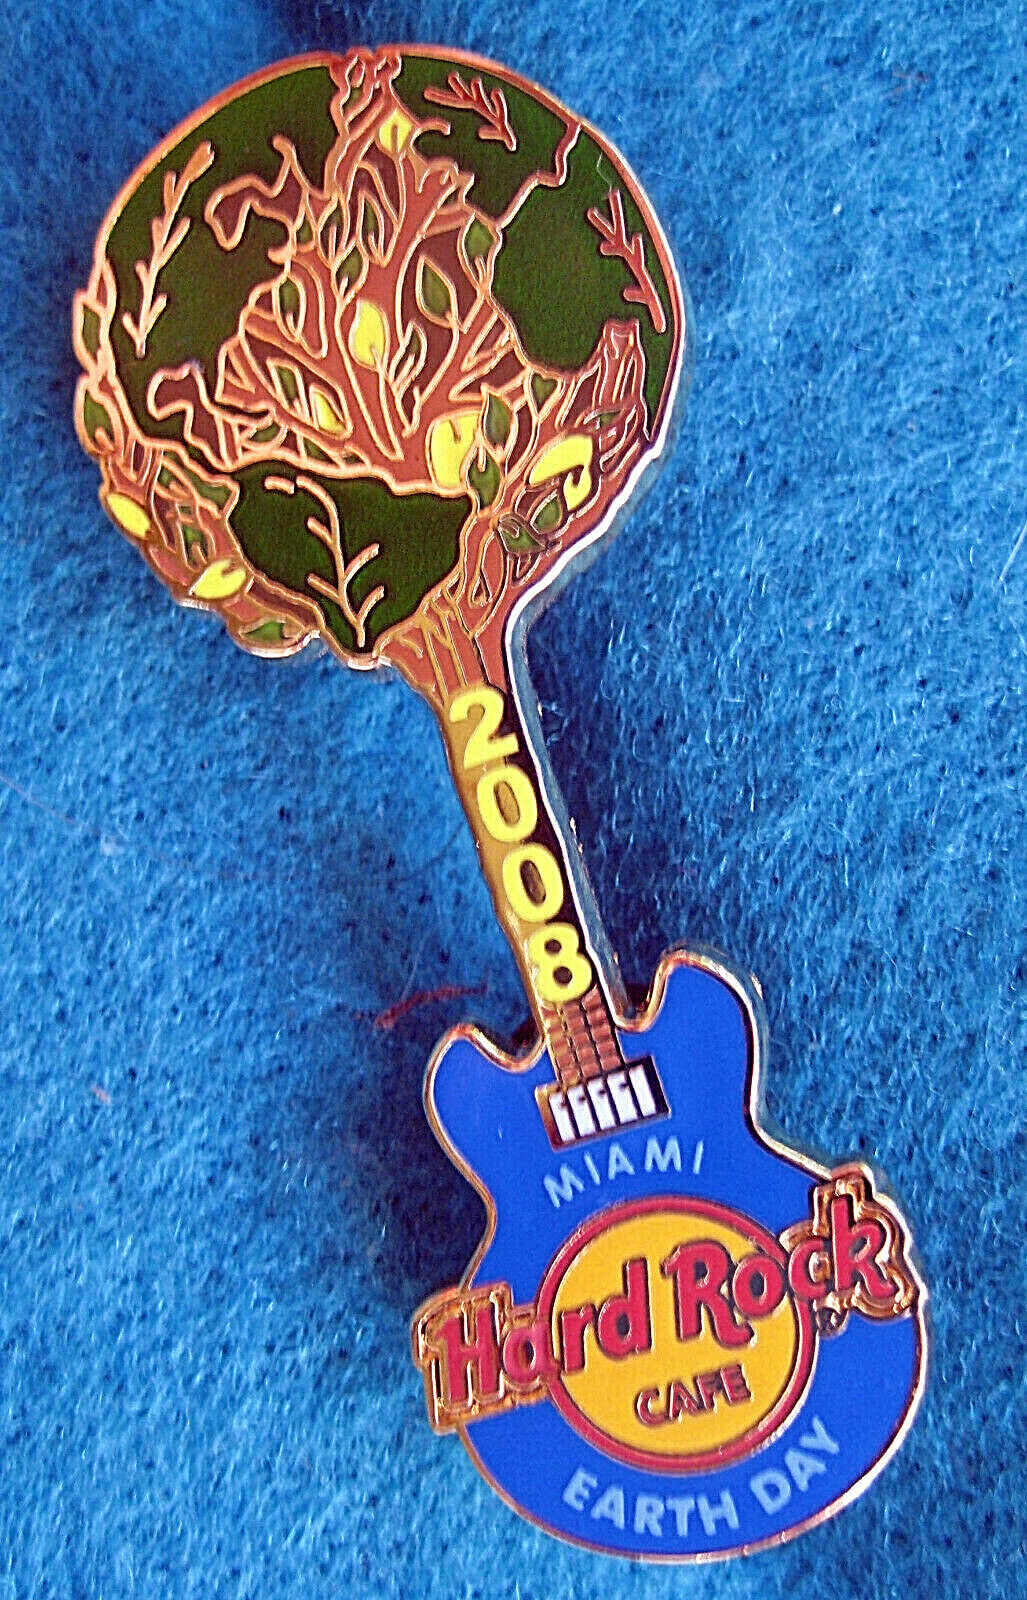 MIAMI EARTH DAY 2008 PLANET GLOBE TREE BLUE GUITAR Hard Rock Cafe PIN